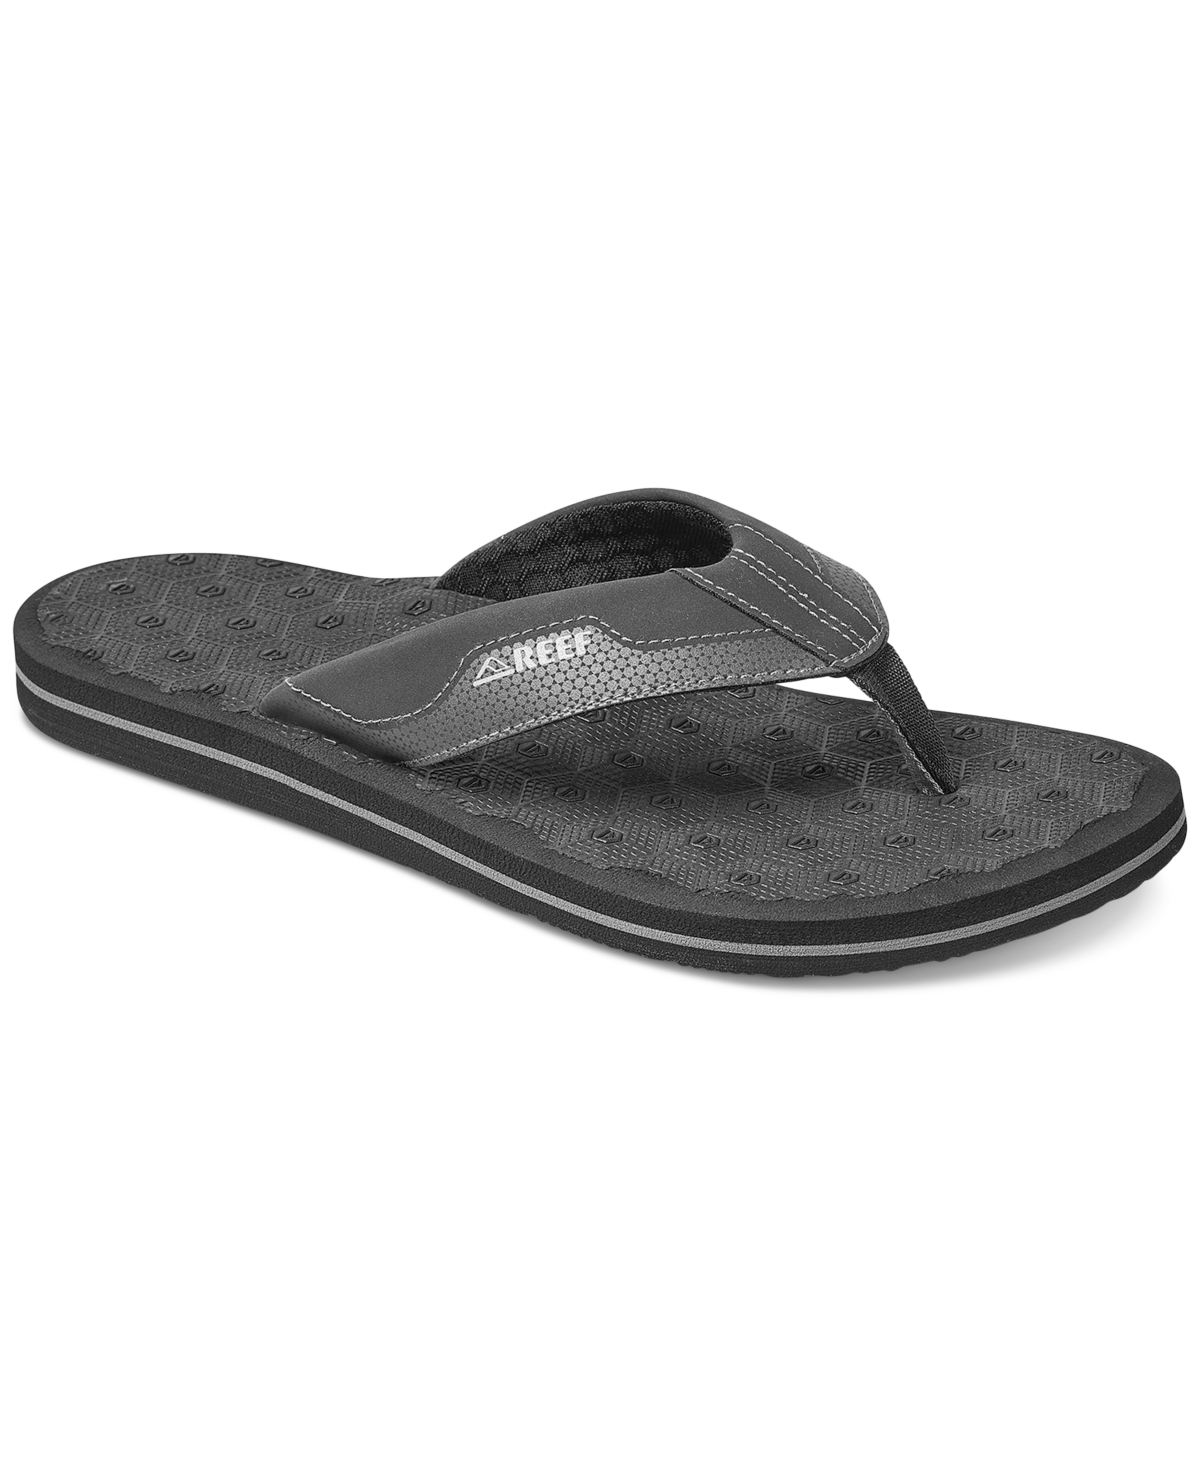 Men's The Ripper Flip-Flop Sandals - Dark Grey